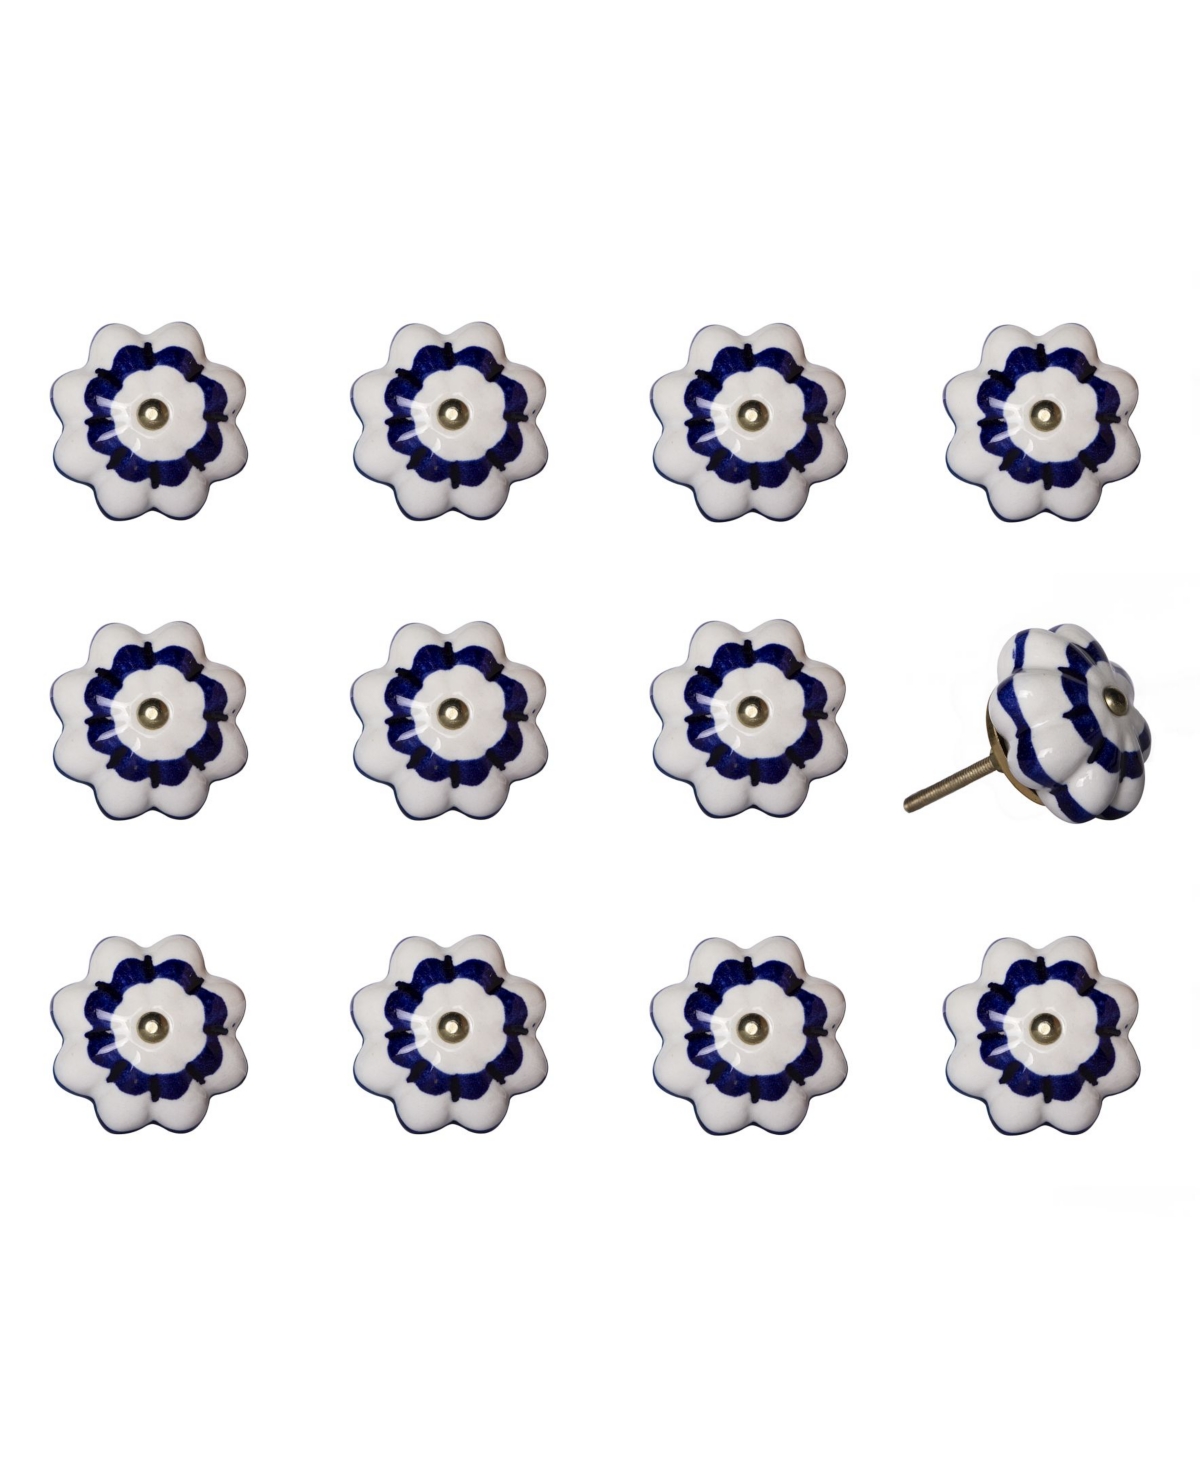 10157445 Knob-It Handpainted Ceramic Knob Set of 12 sku 10157445